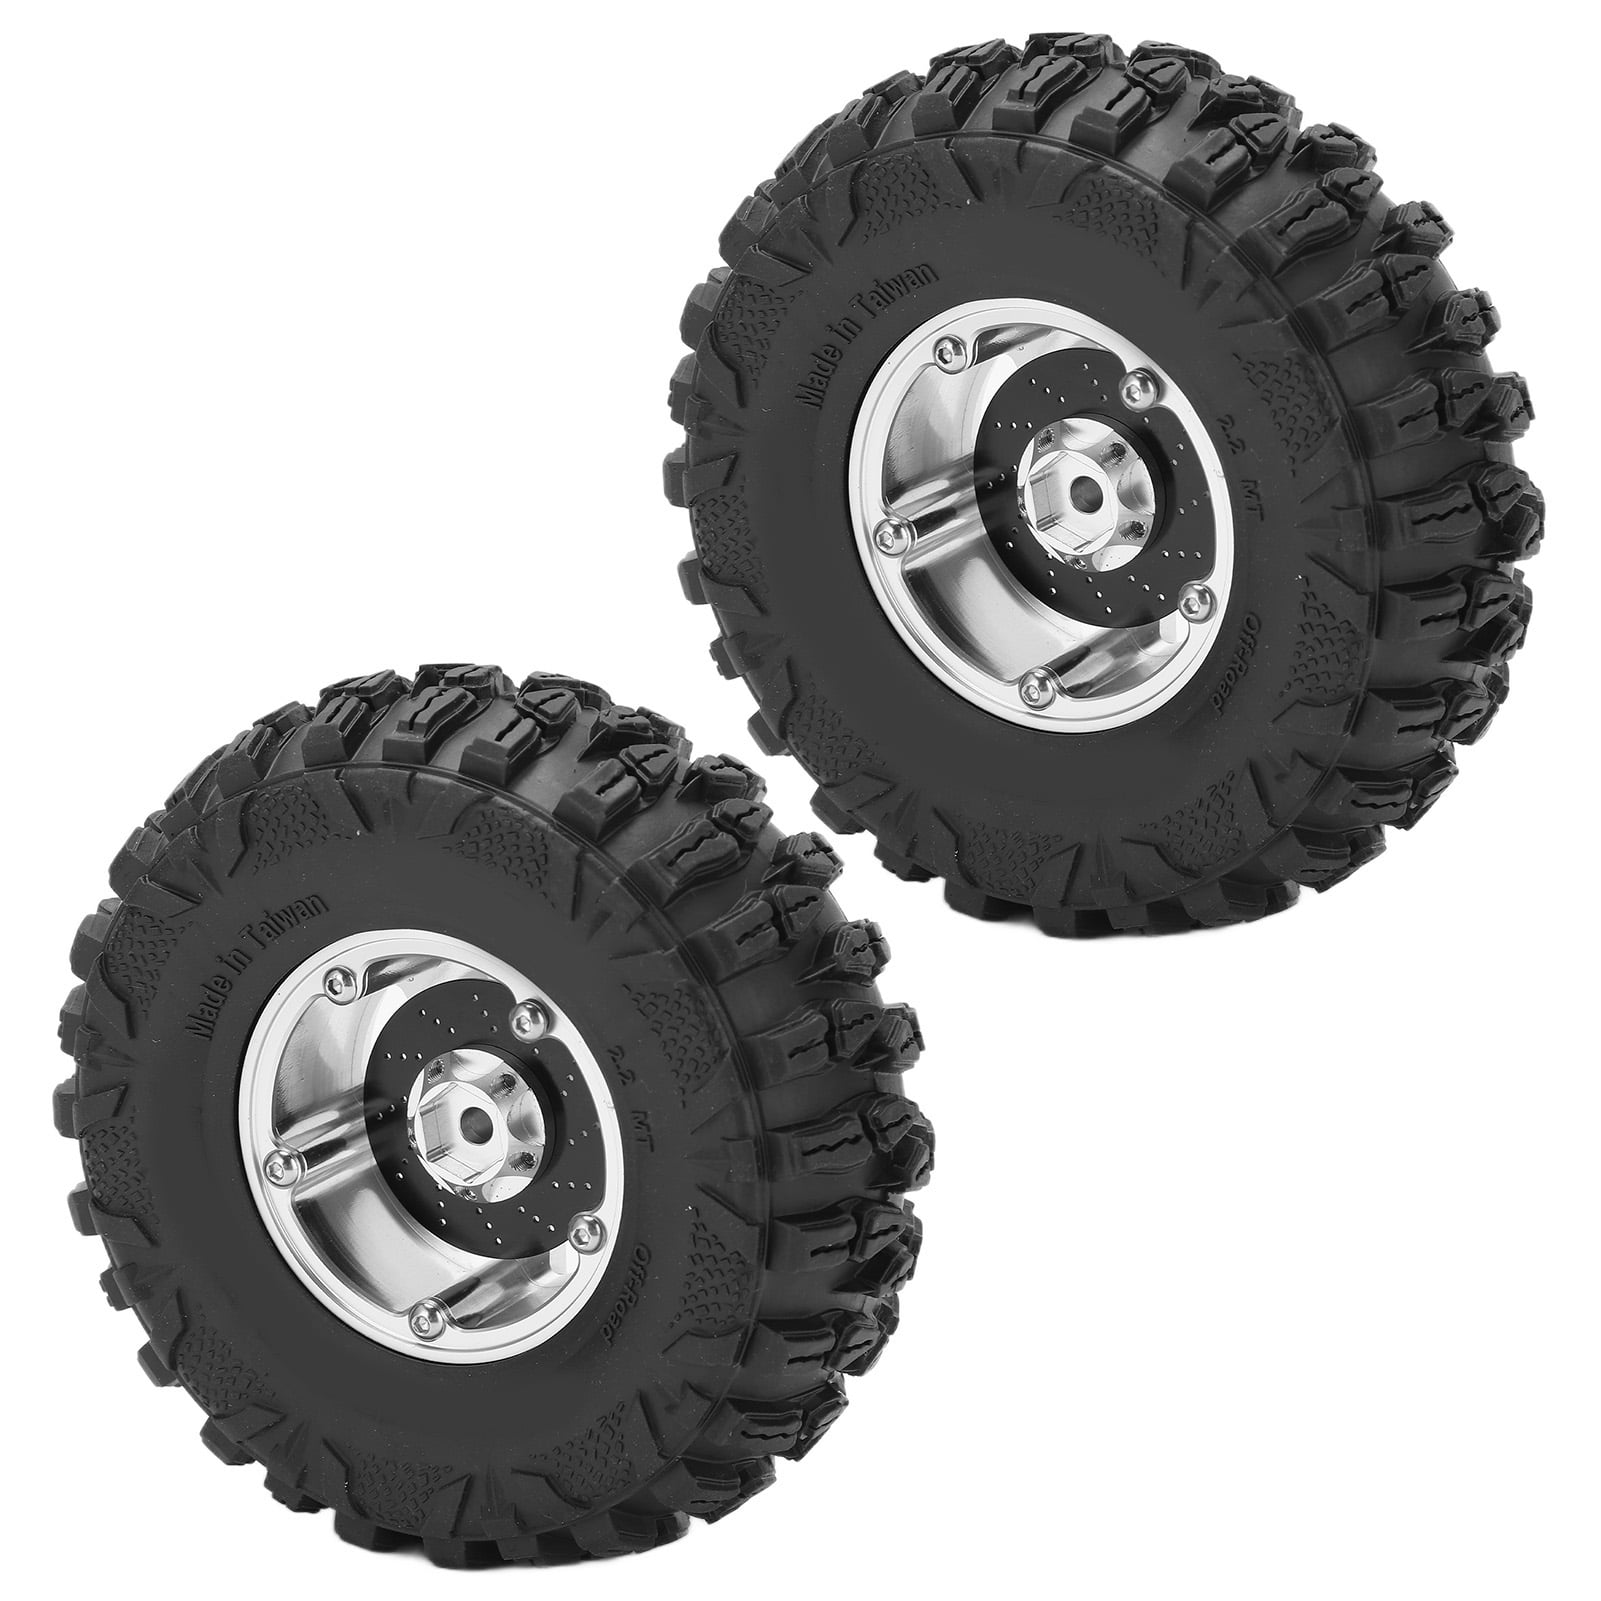 INJORA 4Pcs Aluminum Alloy 2.2 Wheel Outer Ring Rims for 1/10 RC Crawler Axial SCX10 90046 TRX4 Black-2.2 